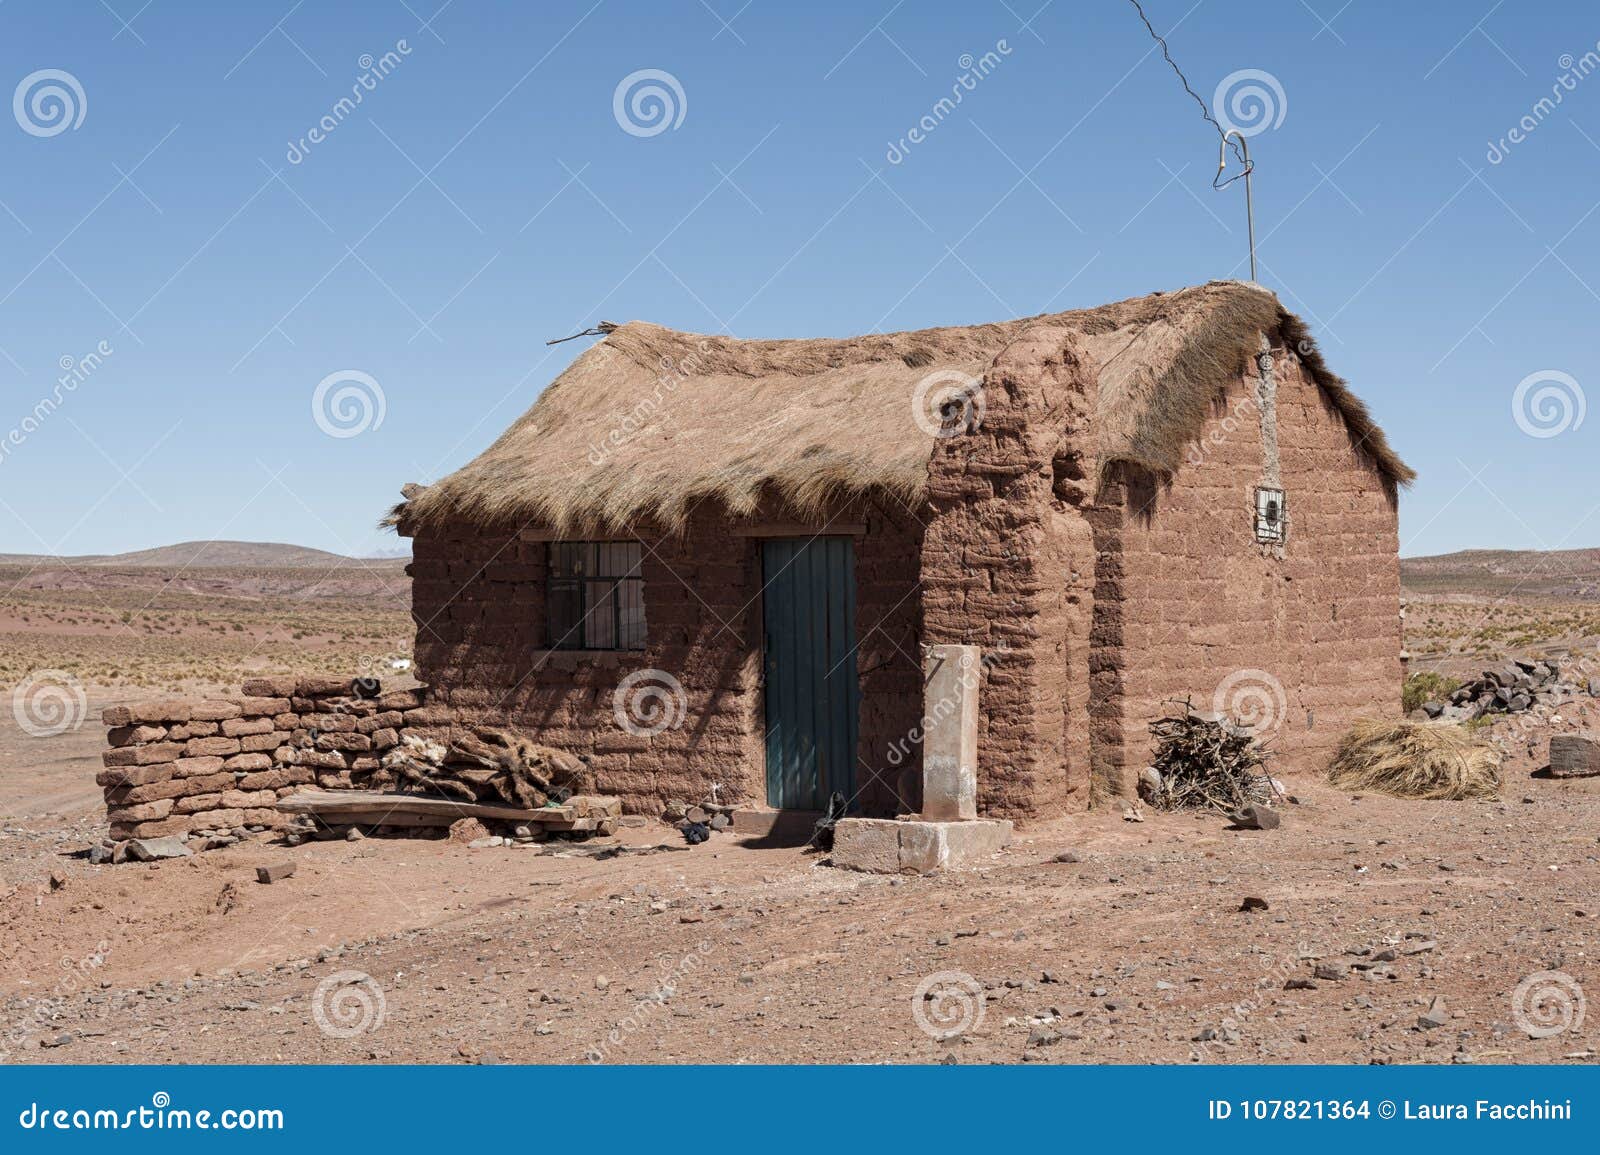 adobe house in cerrillos village on bolivian altiplano near eduardo avaroa andean fauna national reserve with blue sky, bolivia